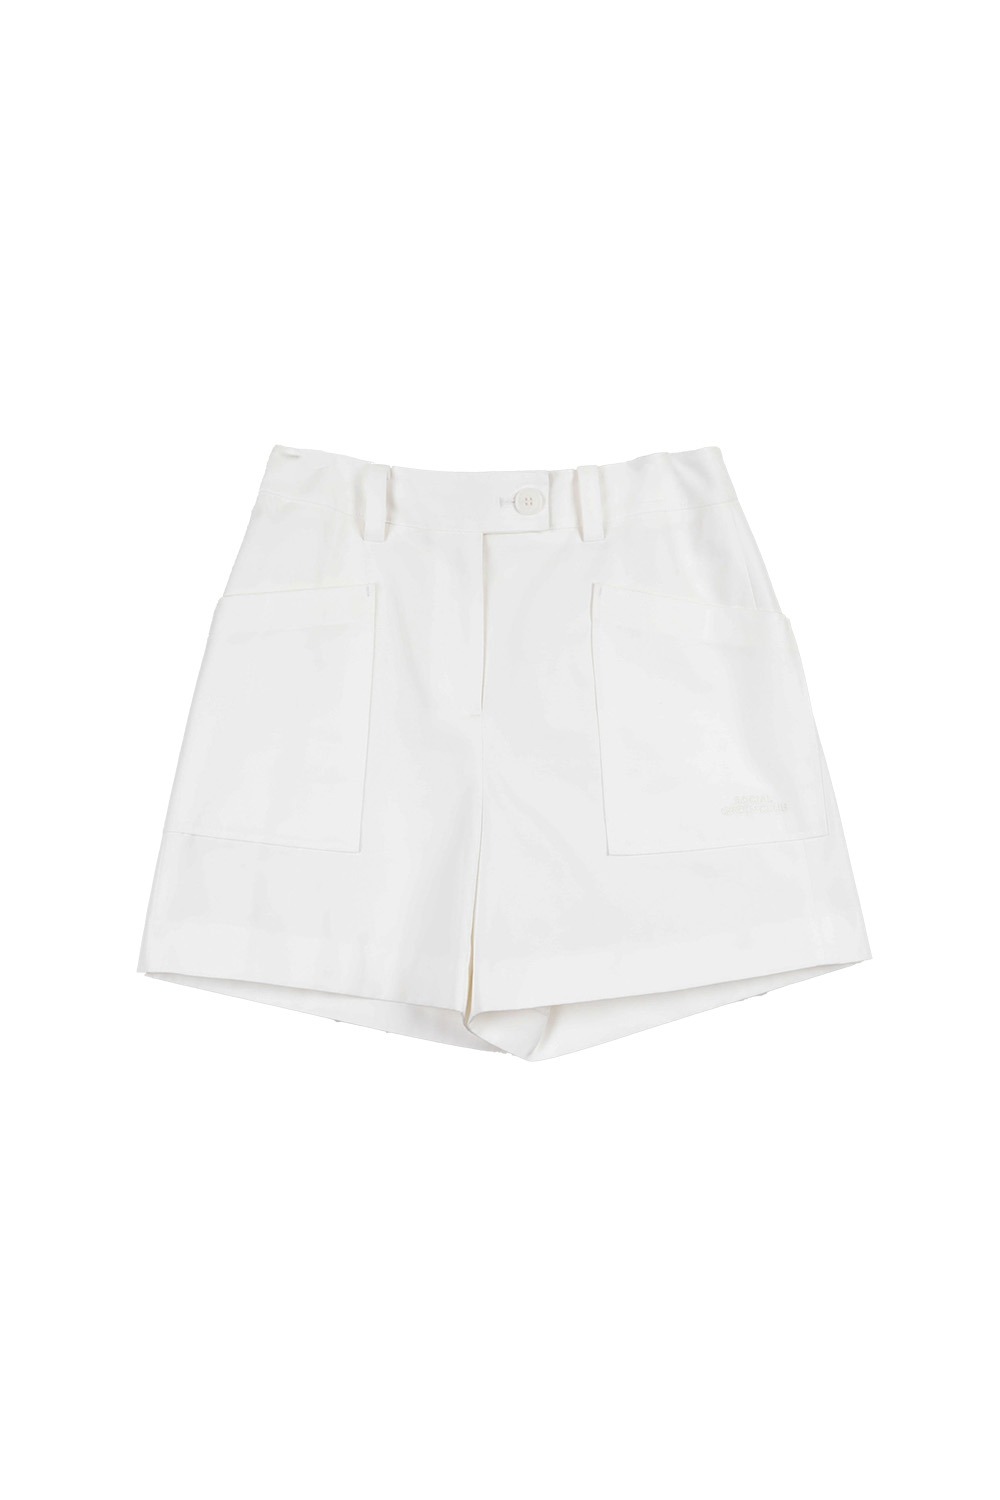 Pocket Shorts(White) RICHEZ